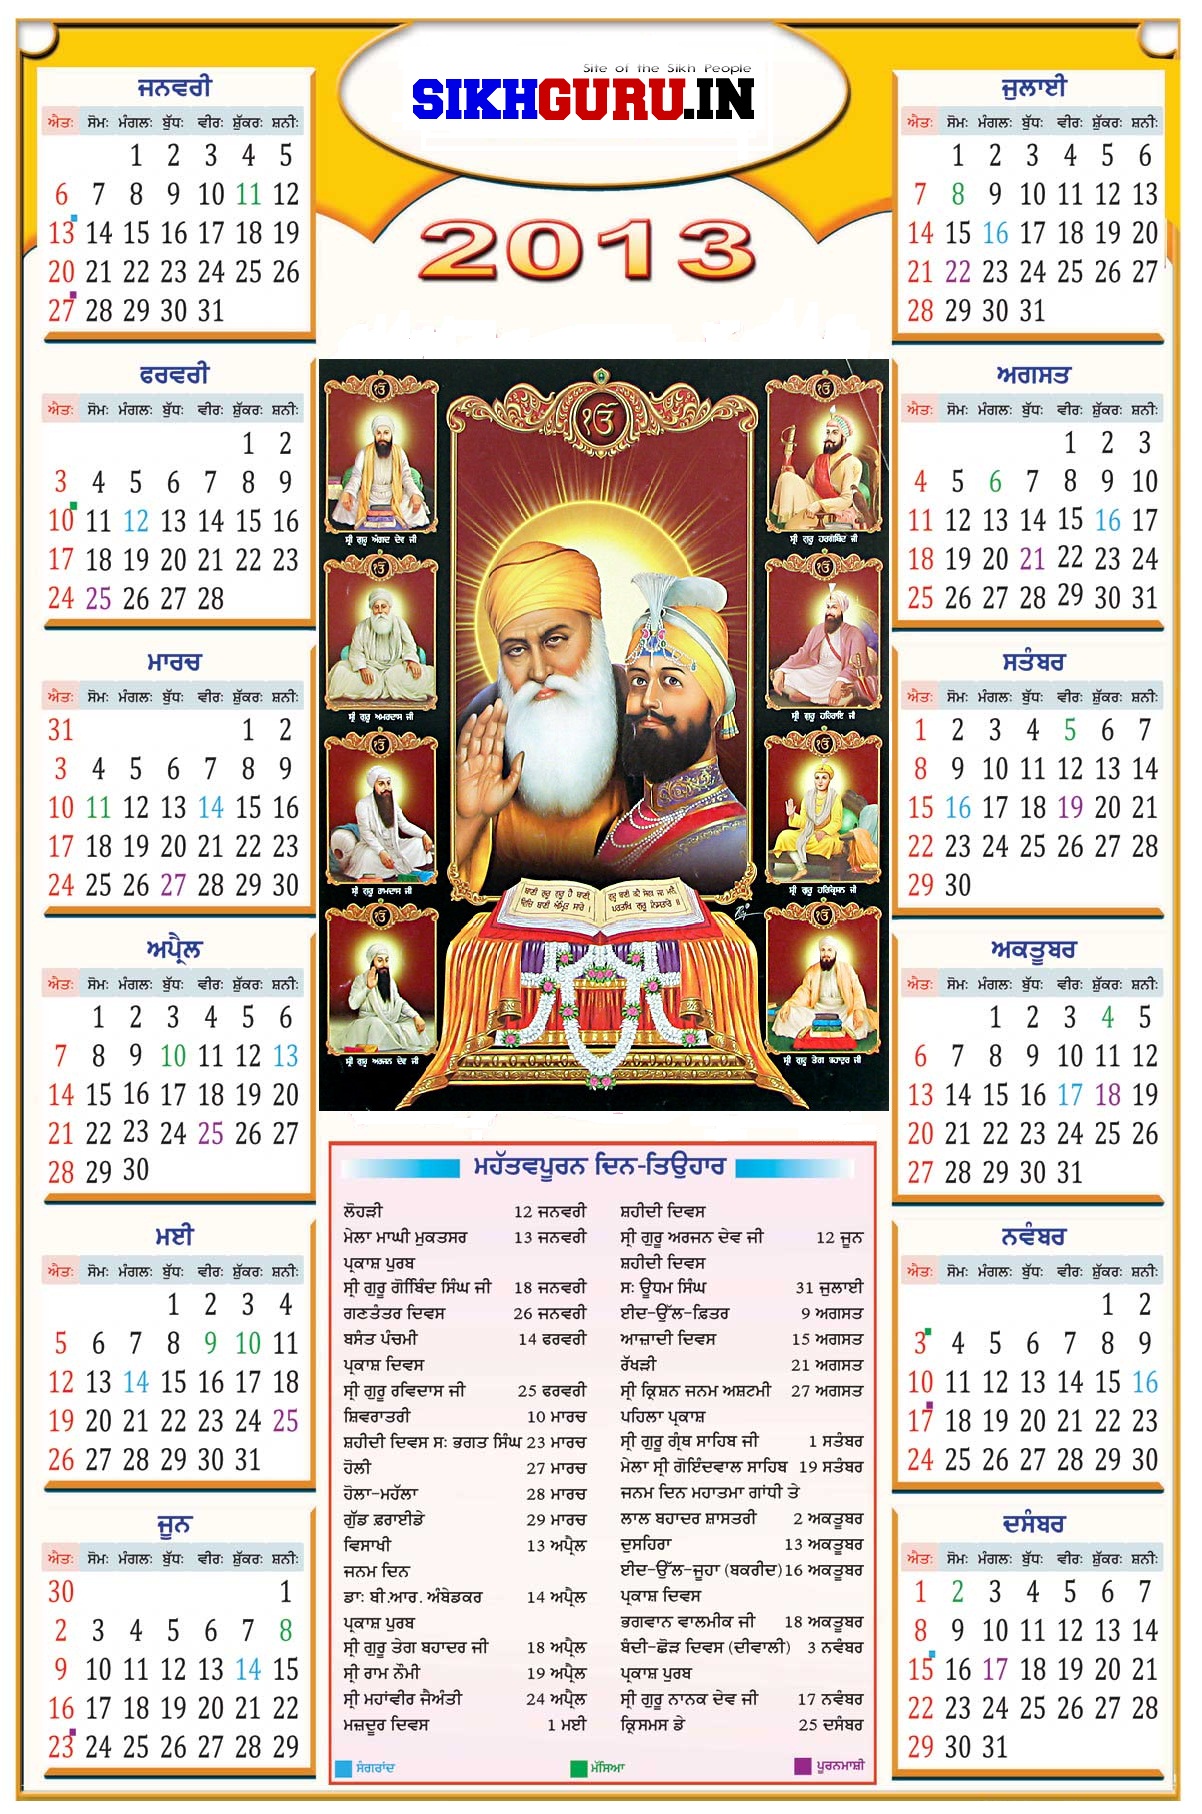 Kirtan Gurbani Shabad Video Mp3 Sikh Wallpaper Games